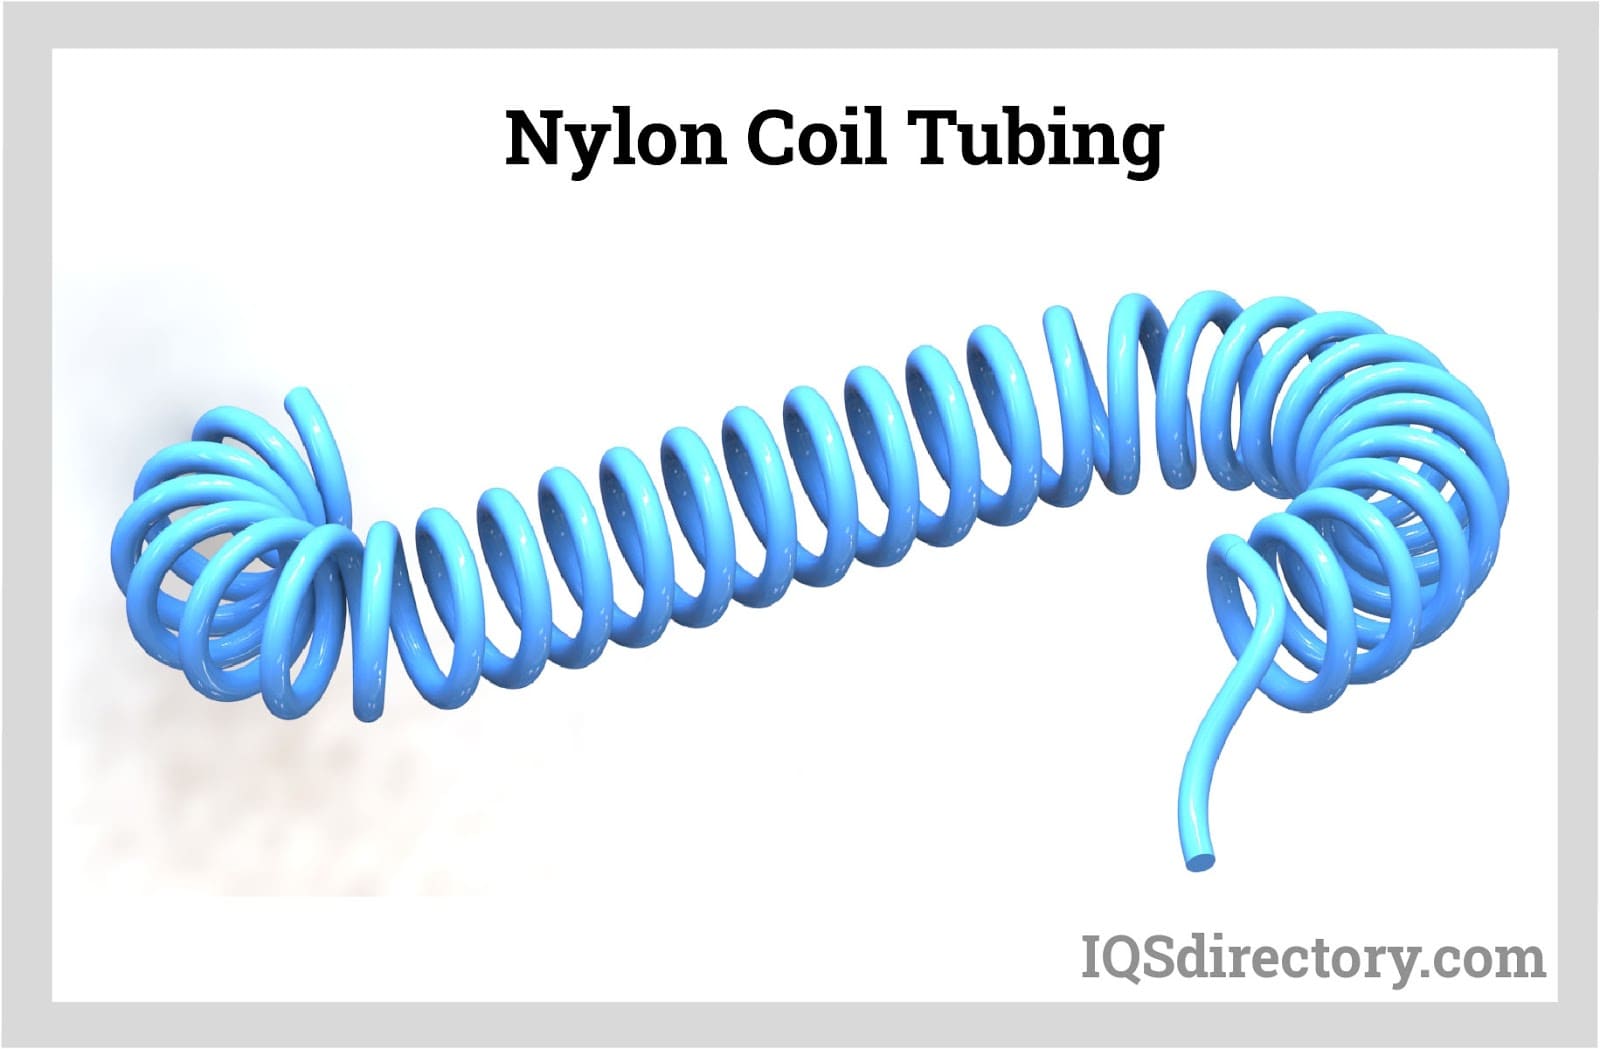 https://www.iqsdirectory.com/articles/plastic-tubing/nylon-tubing/nylon-coil-tubing.jpg